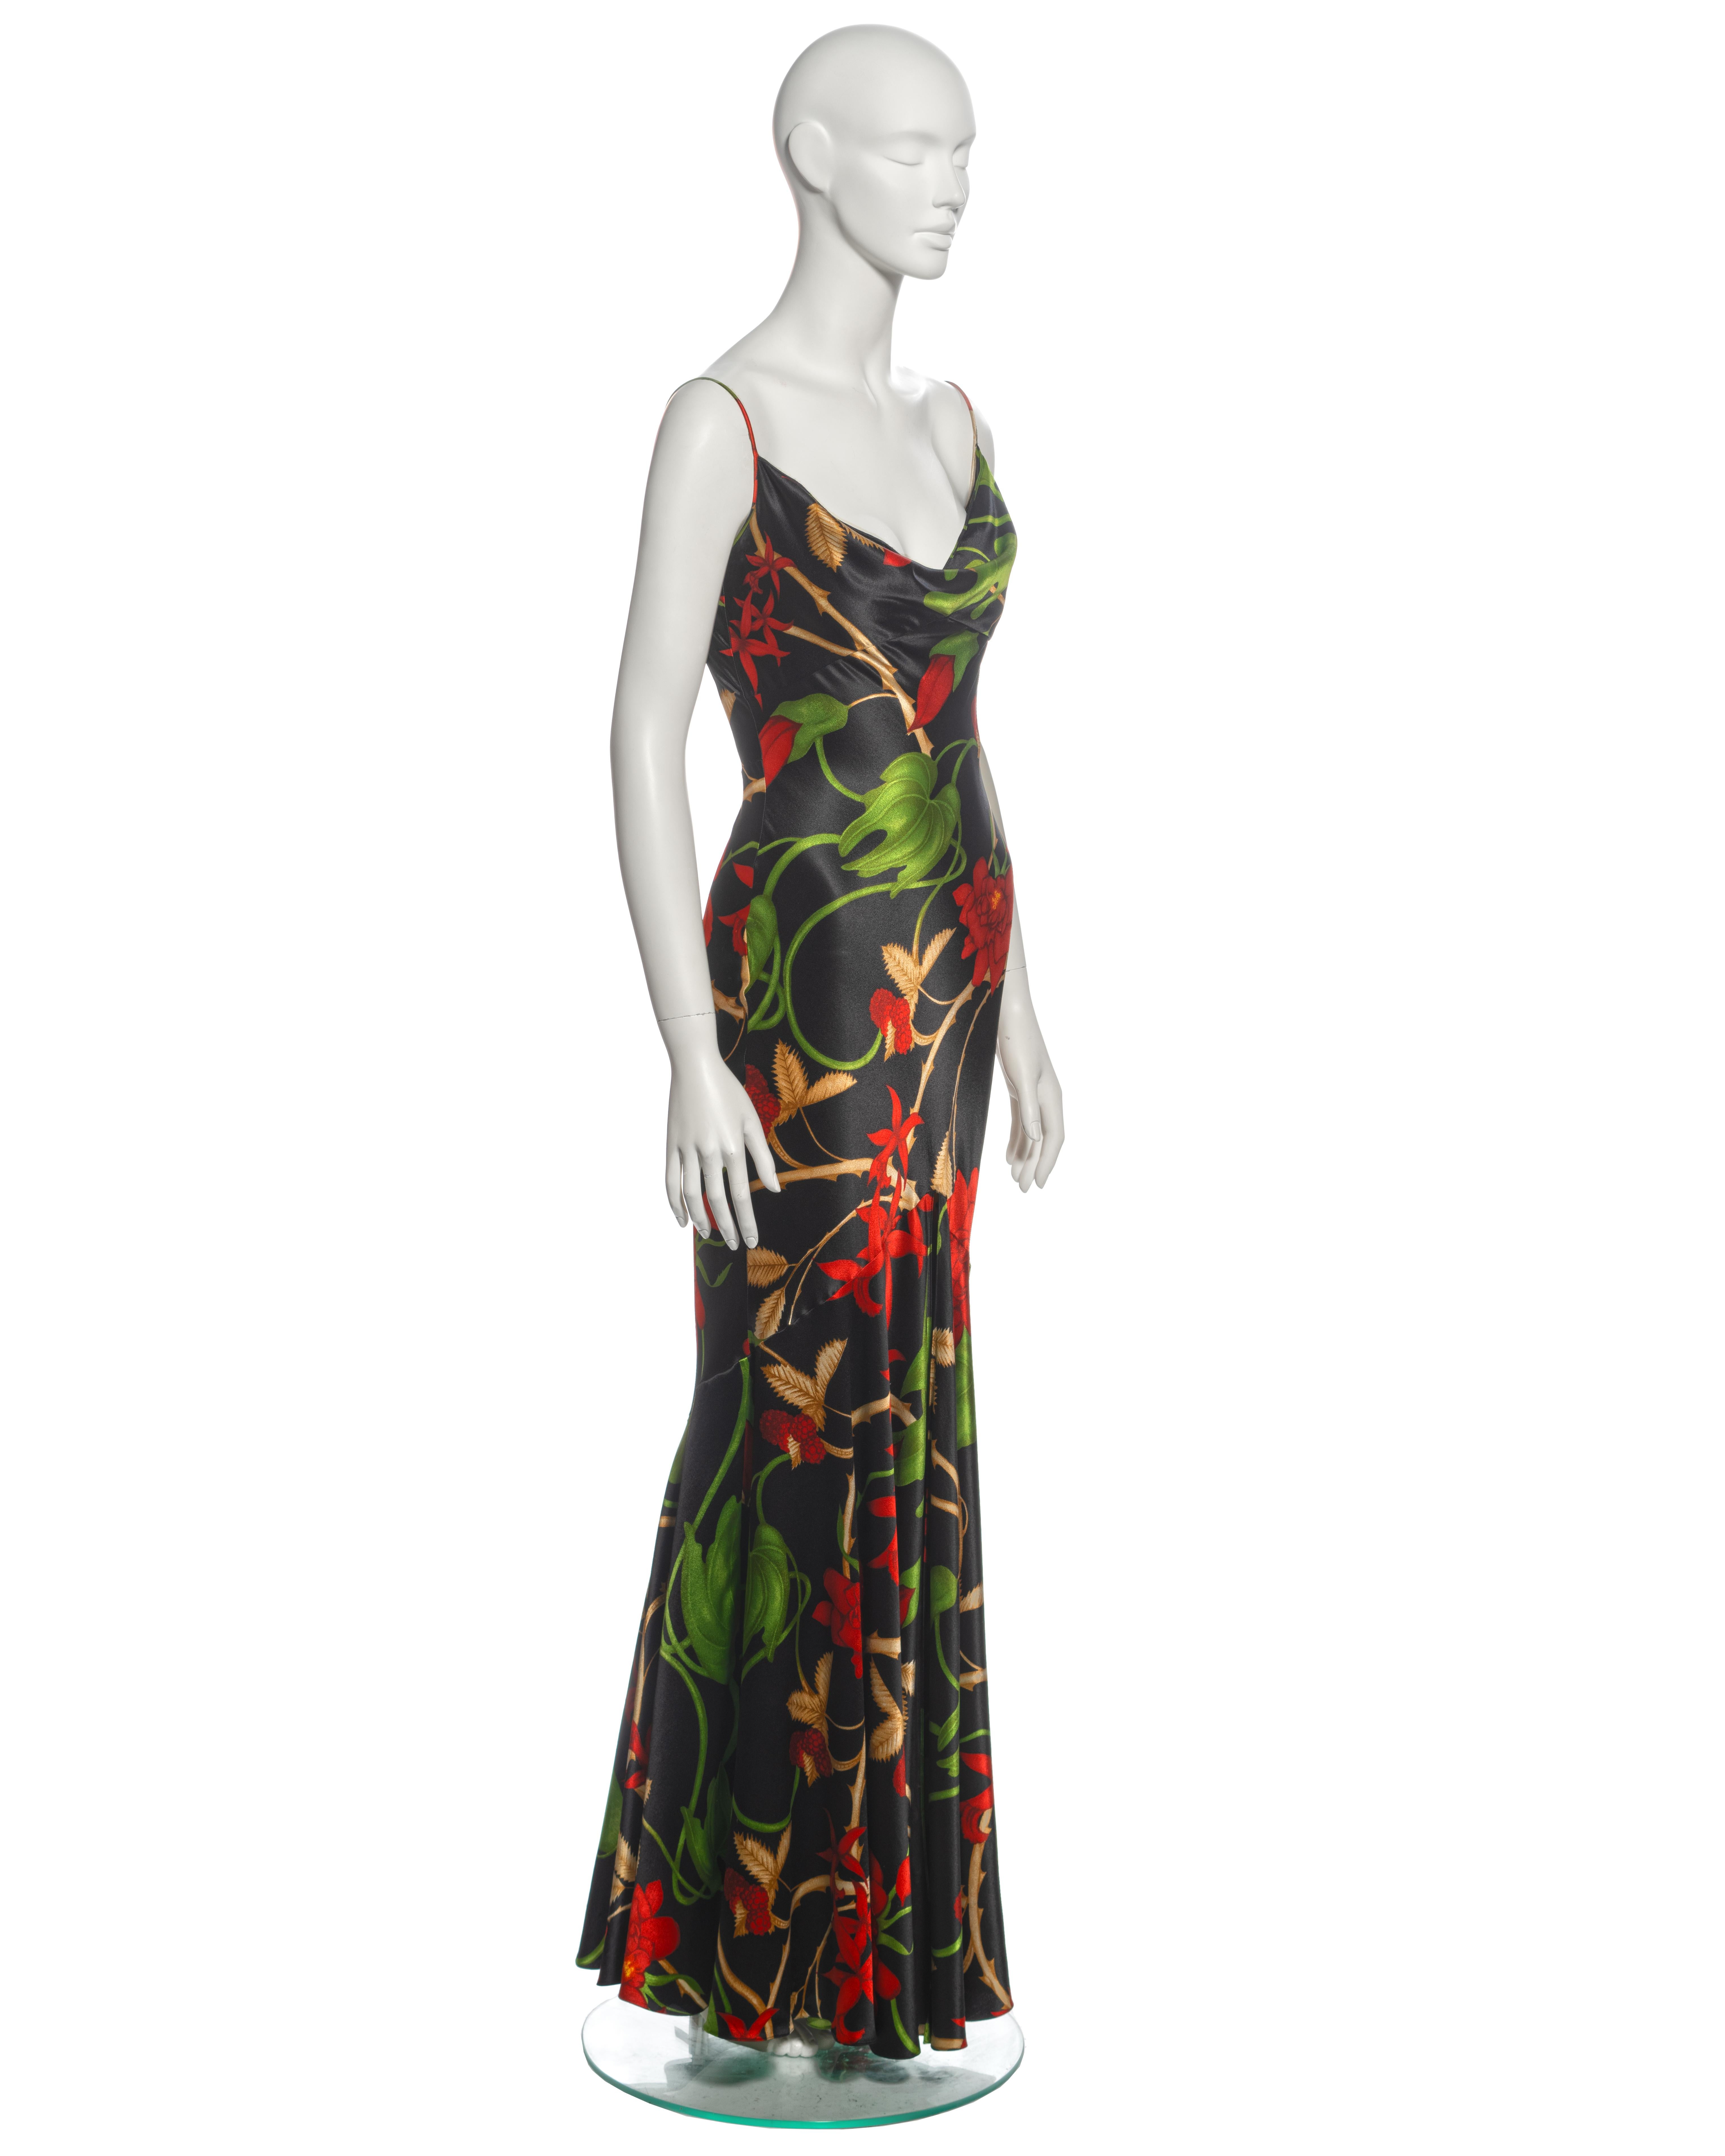 Women's Christian Dior by John Galliano Floral Bias Cut Silk Evening Dress, fw 2002 For Sale